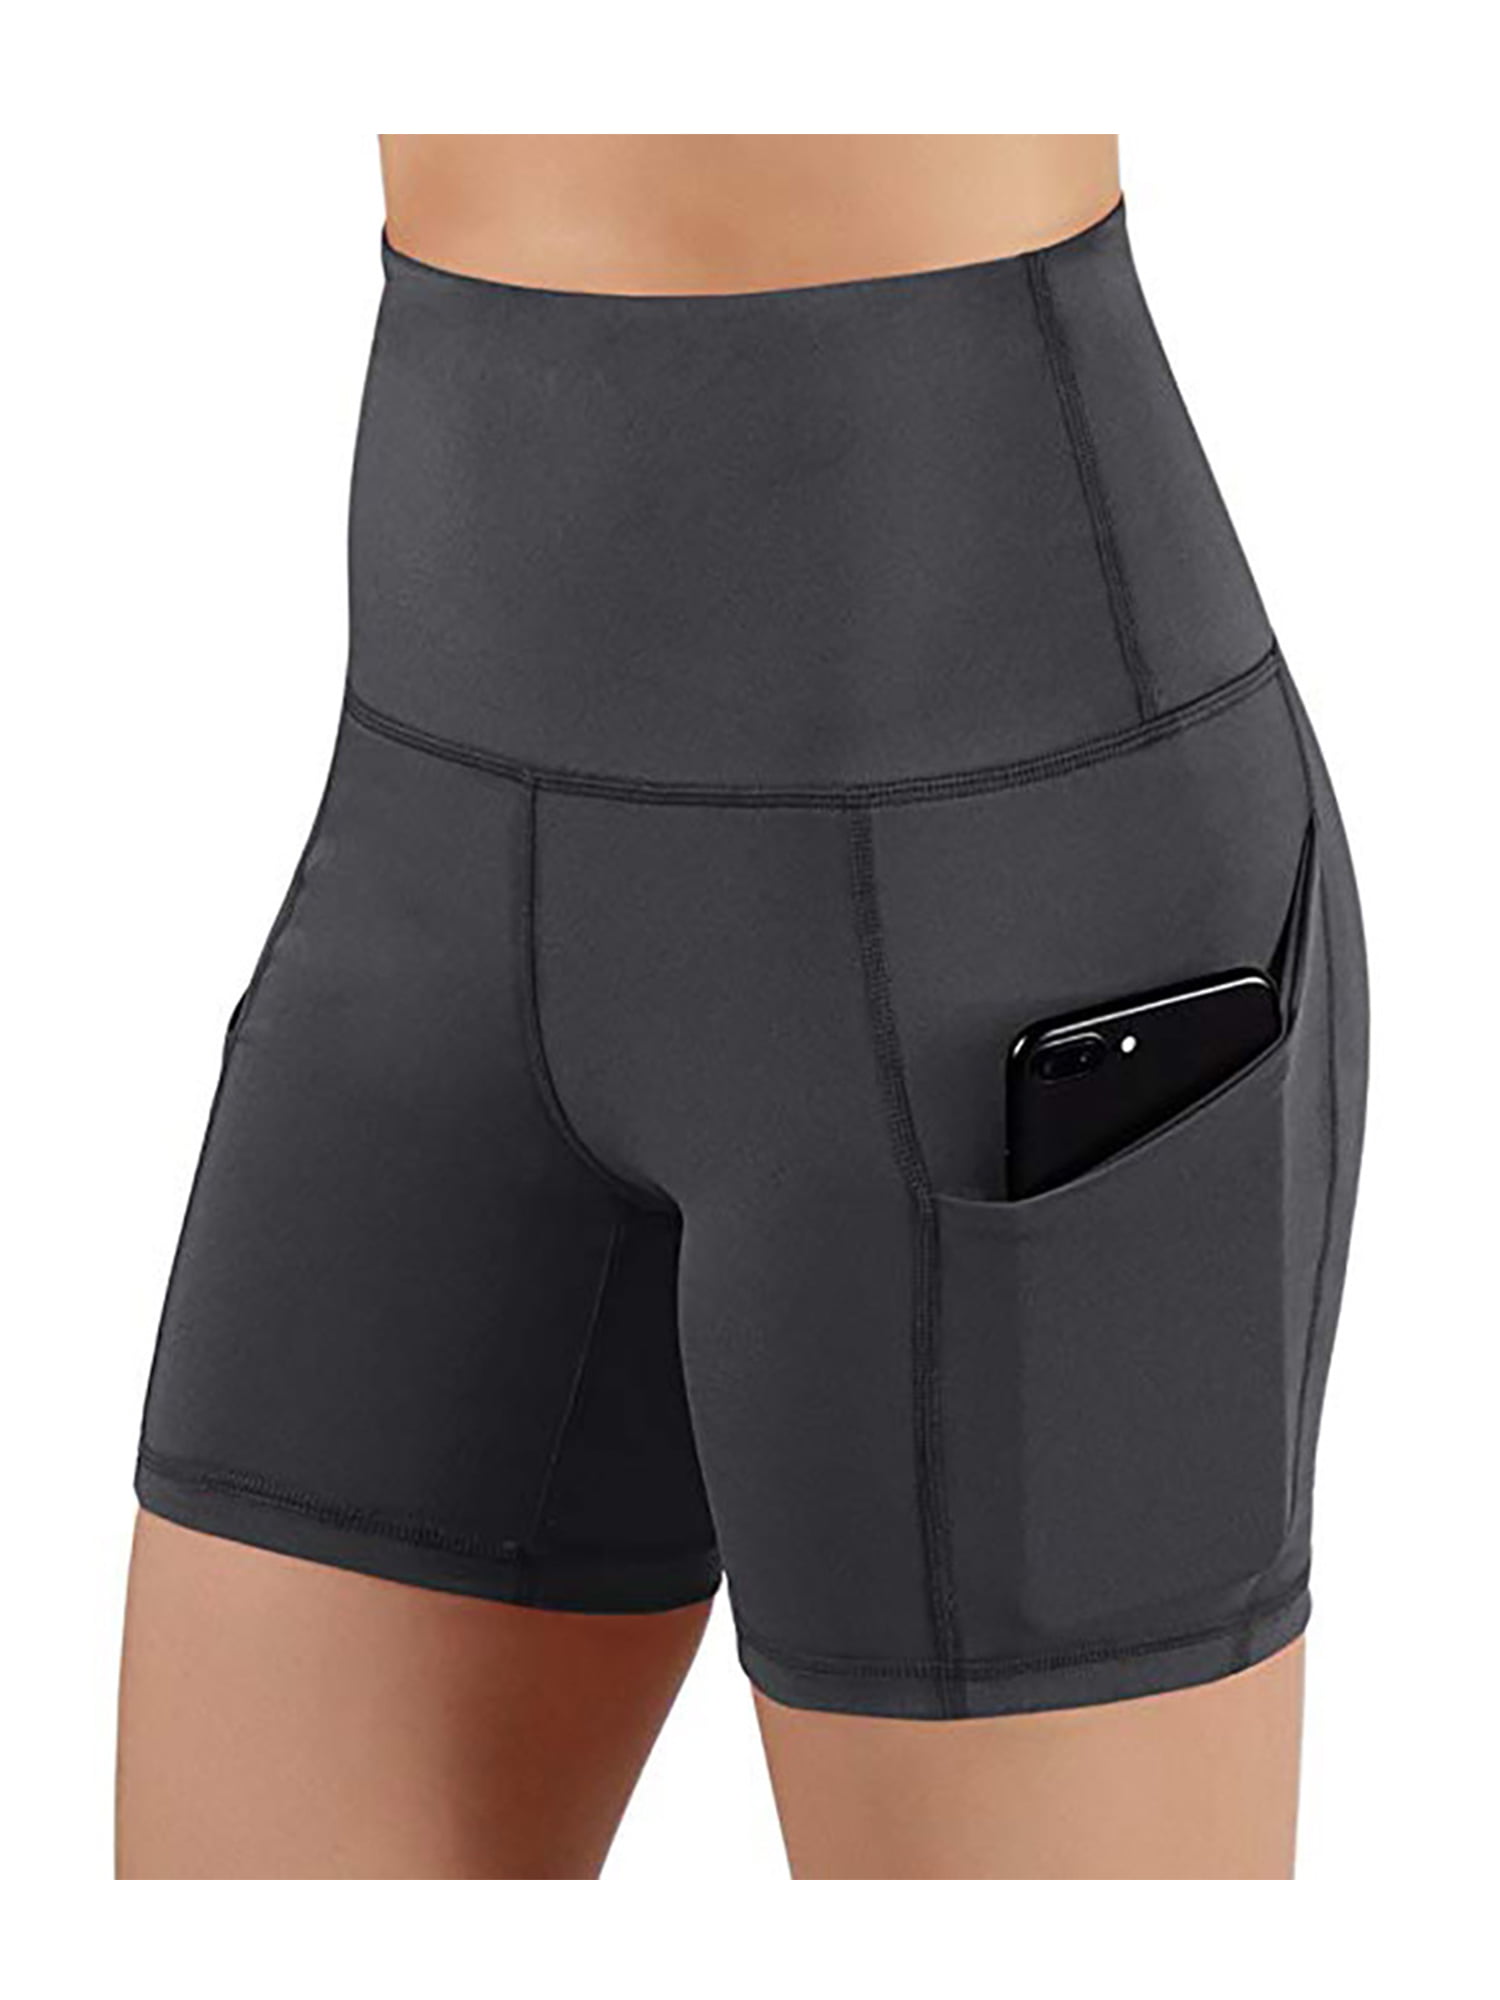 VERTAST Womens 3 Pairs Pack Women Sports Shorts Yoga Pants High Waist Workout Running Shorts Tummy Control Shorts Pants Side Pocket